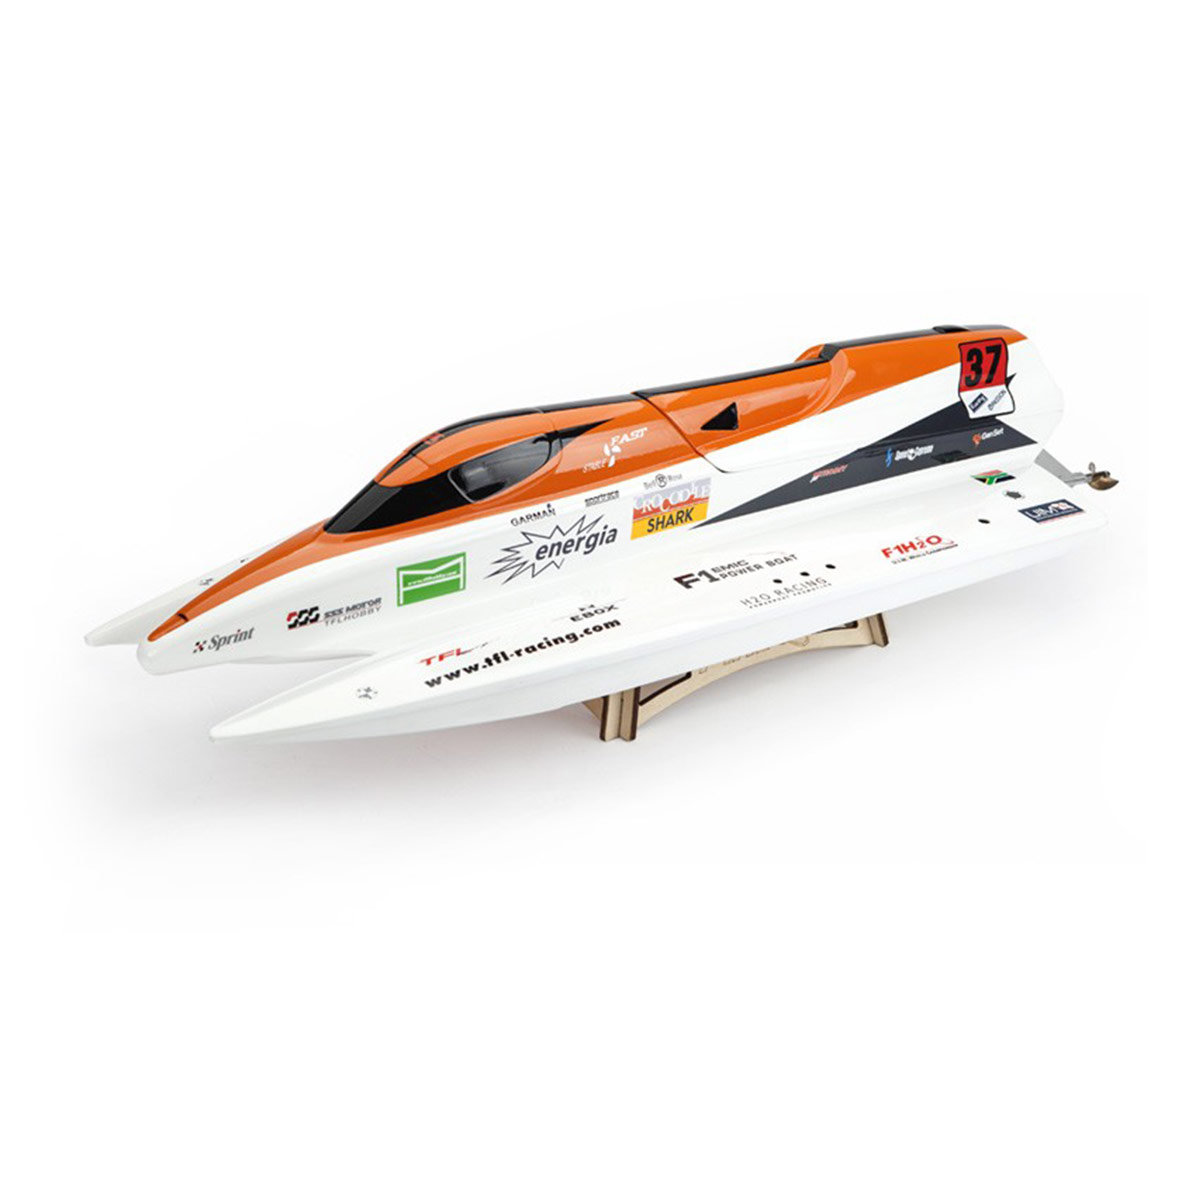 TFL 1138 Caudwell F1 Anti-Rollover Fiberglass RC Racing Boat Orange and Green voor kiezen